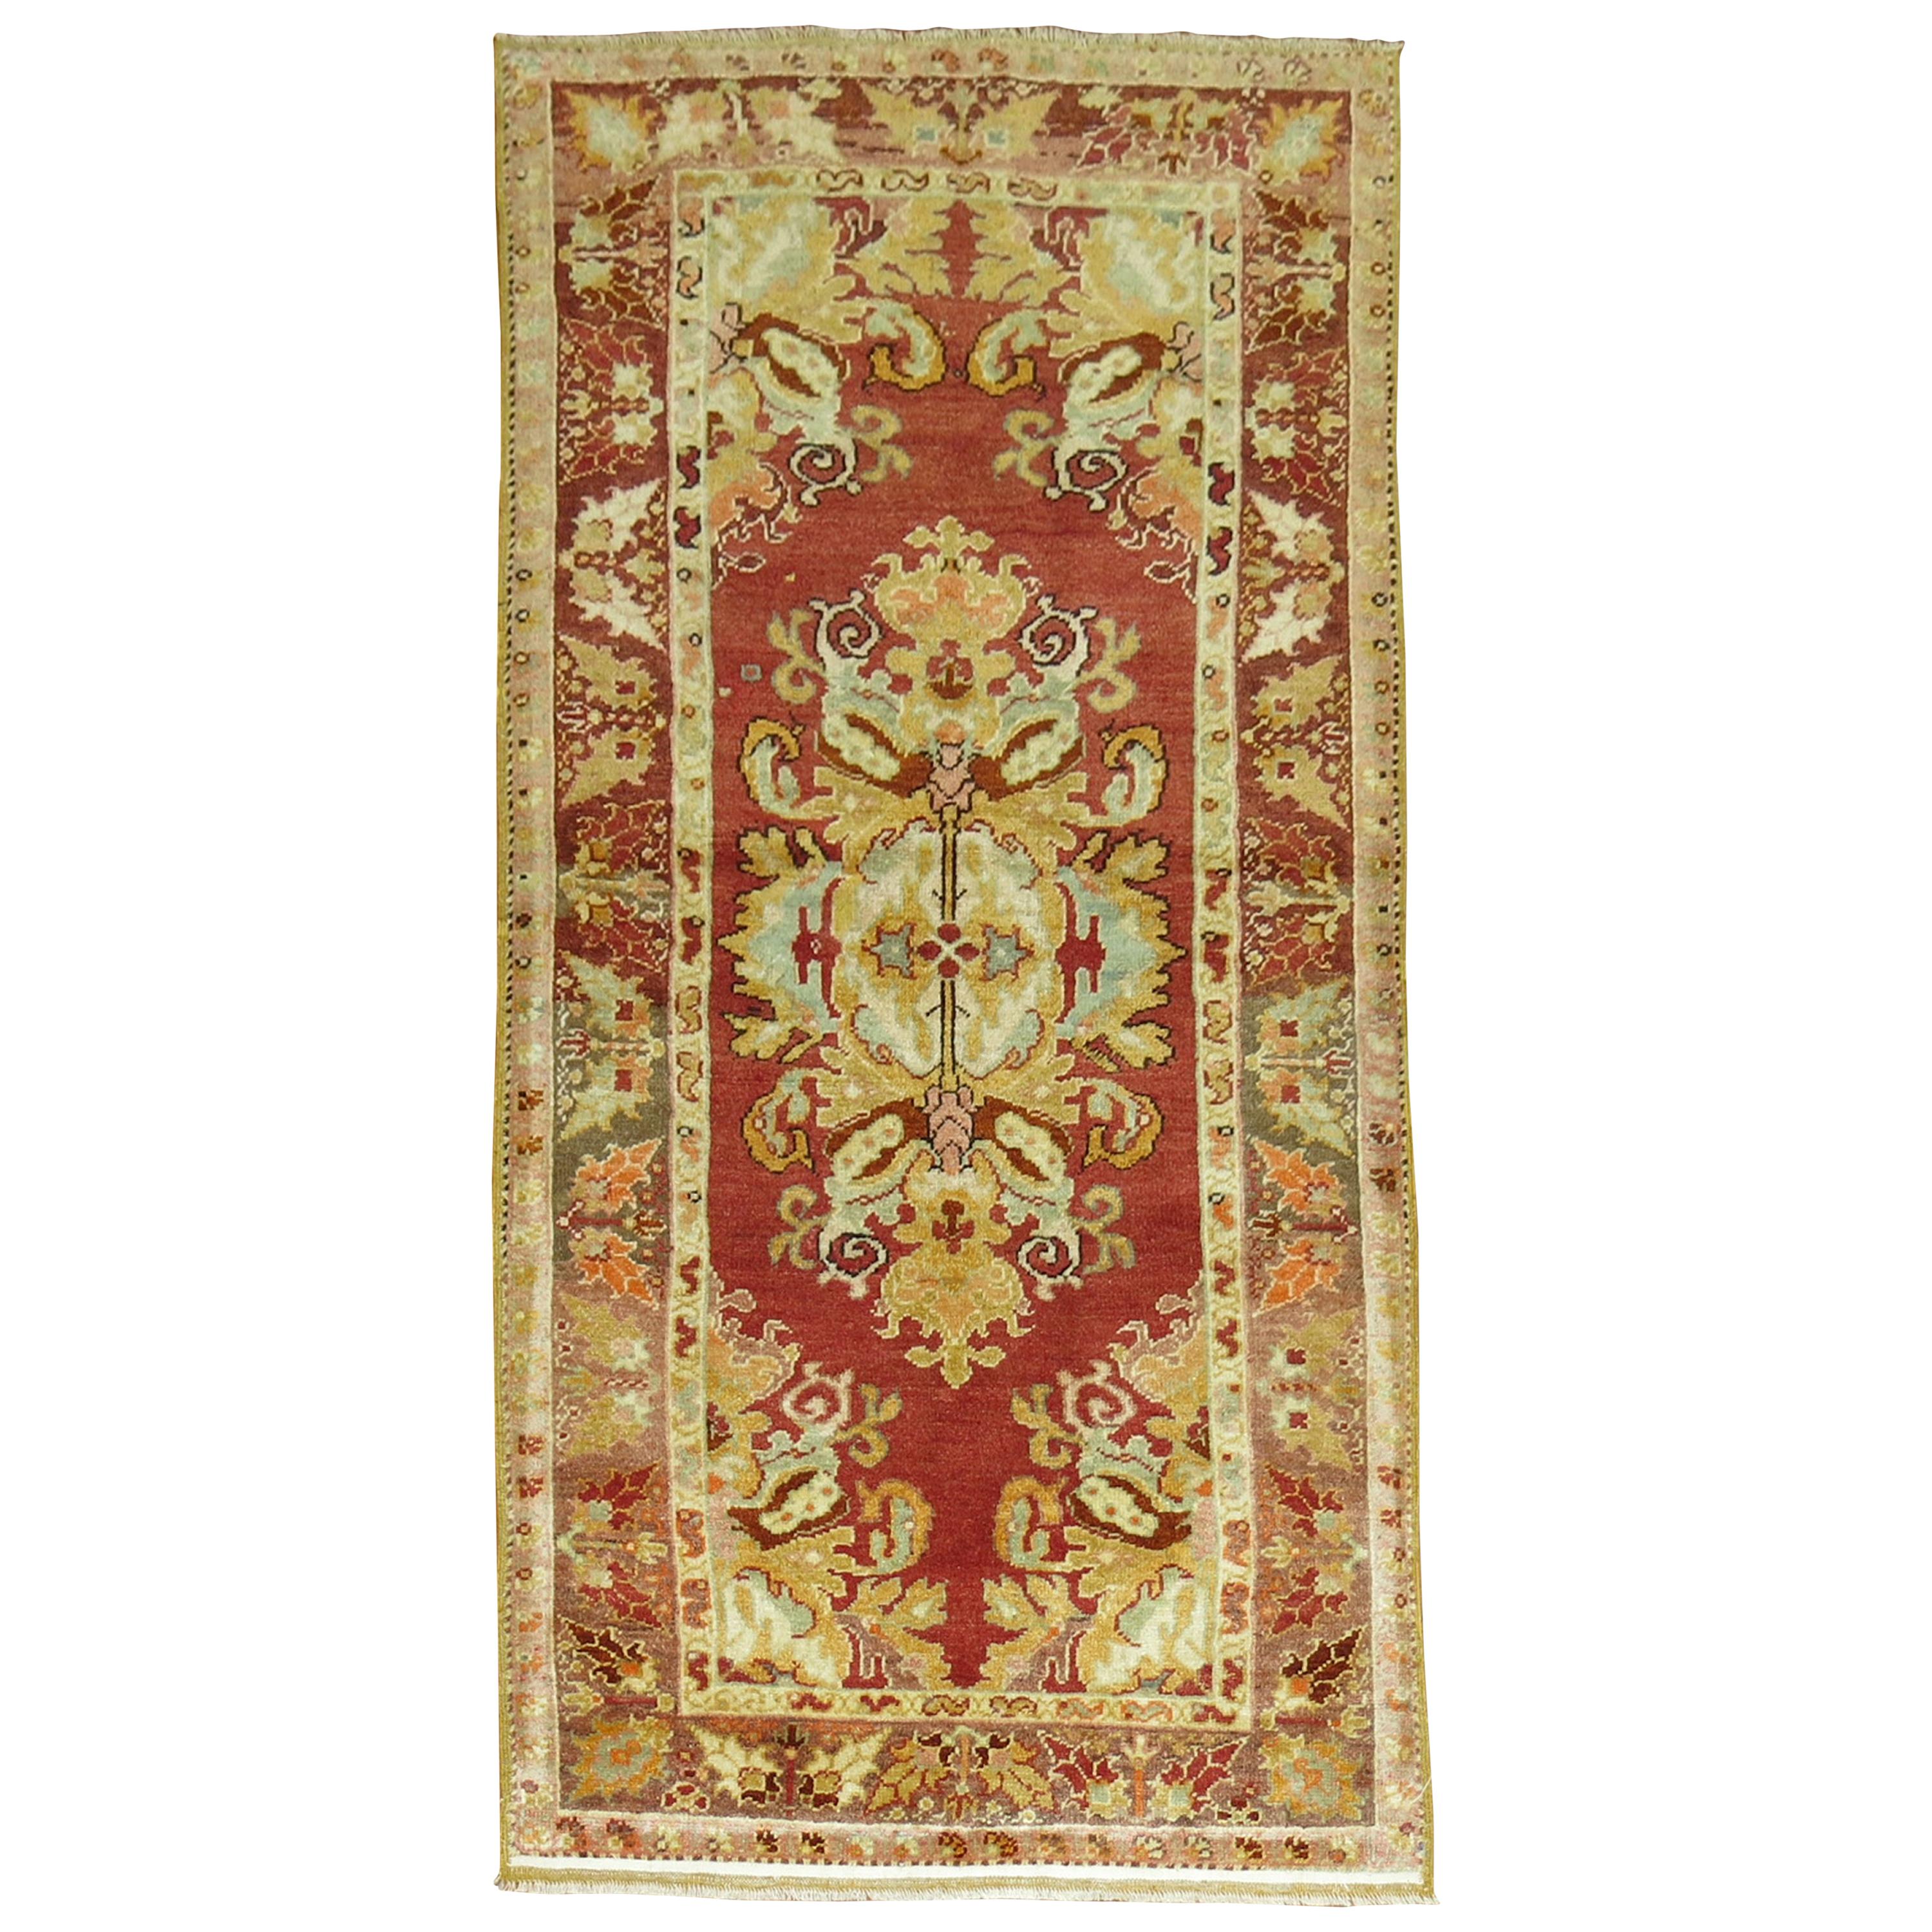 Antiker türkischer Oushak-Roter Teppich aus der Zabihi-Kollektion